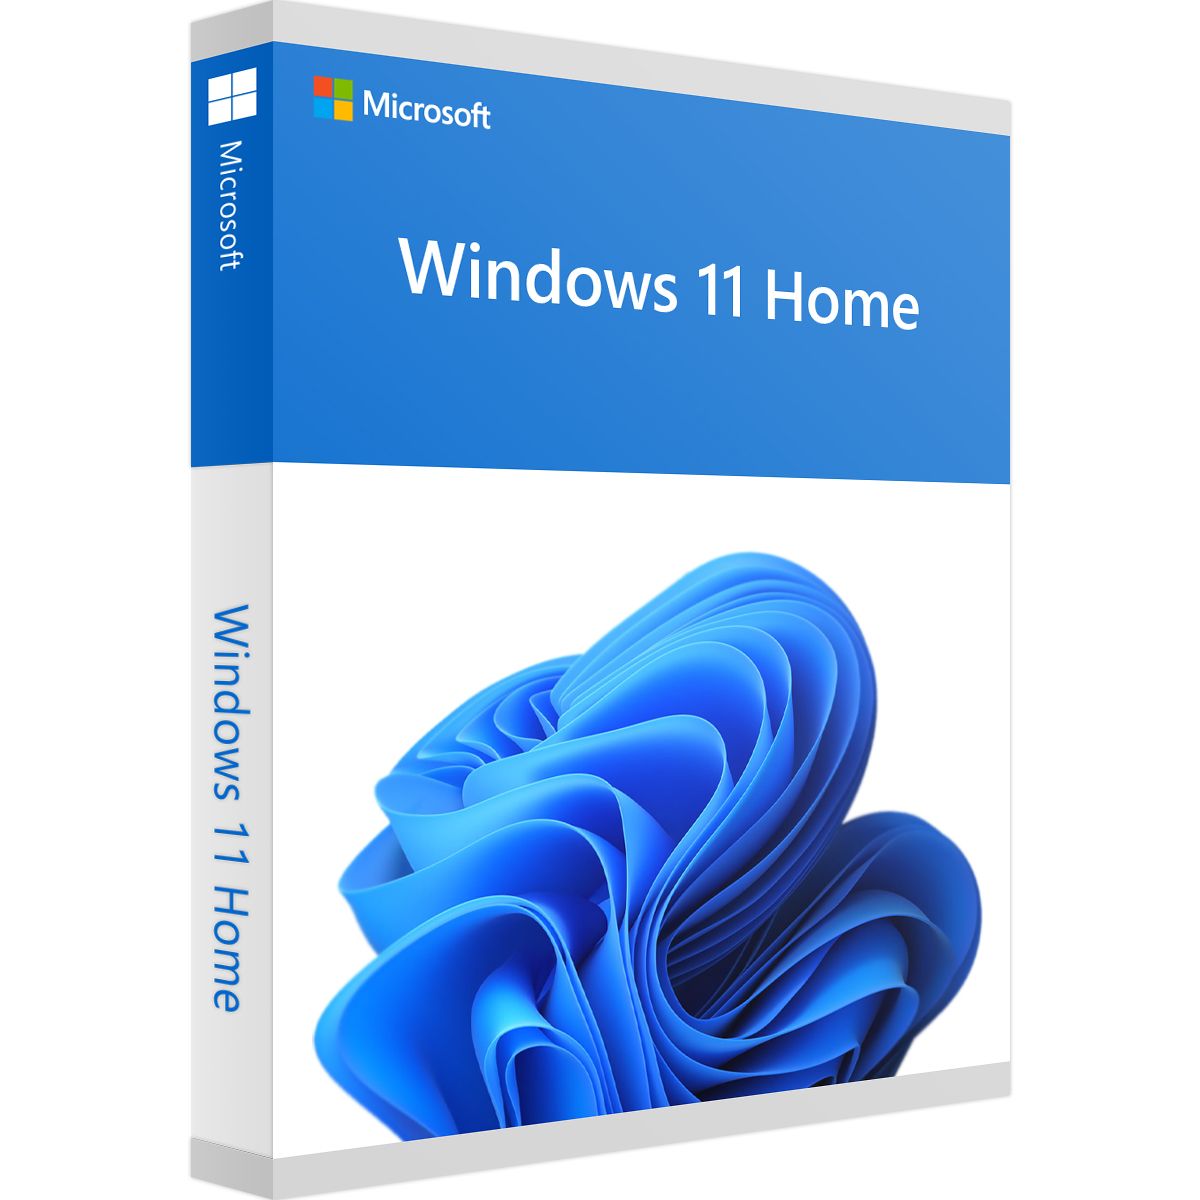 Windows 11 Home - English